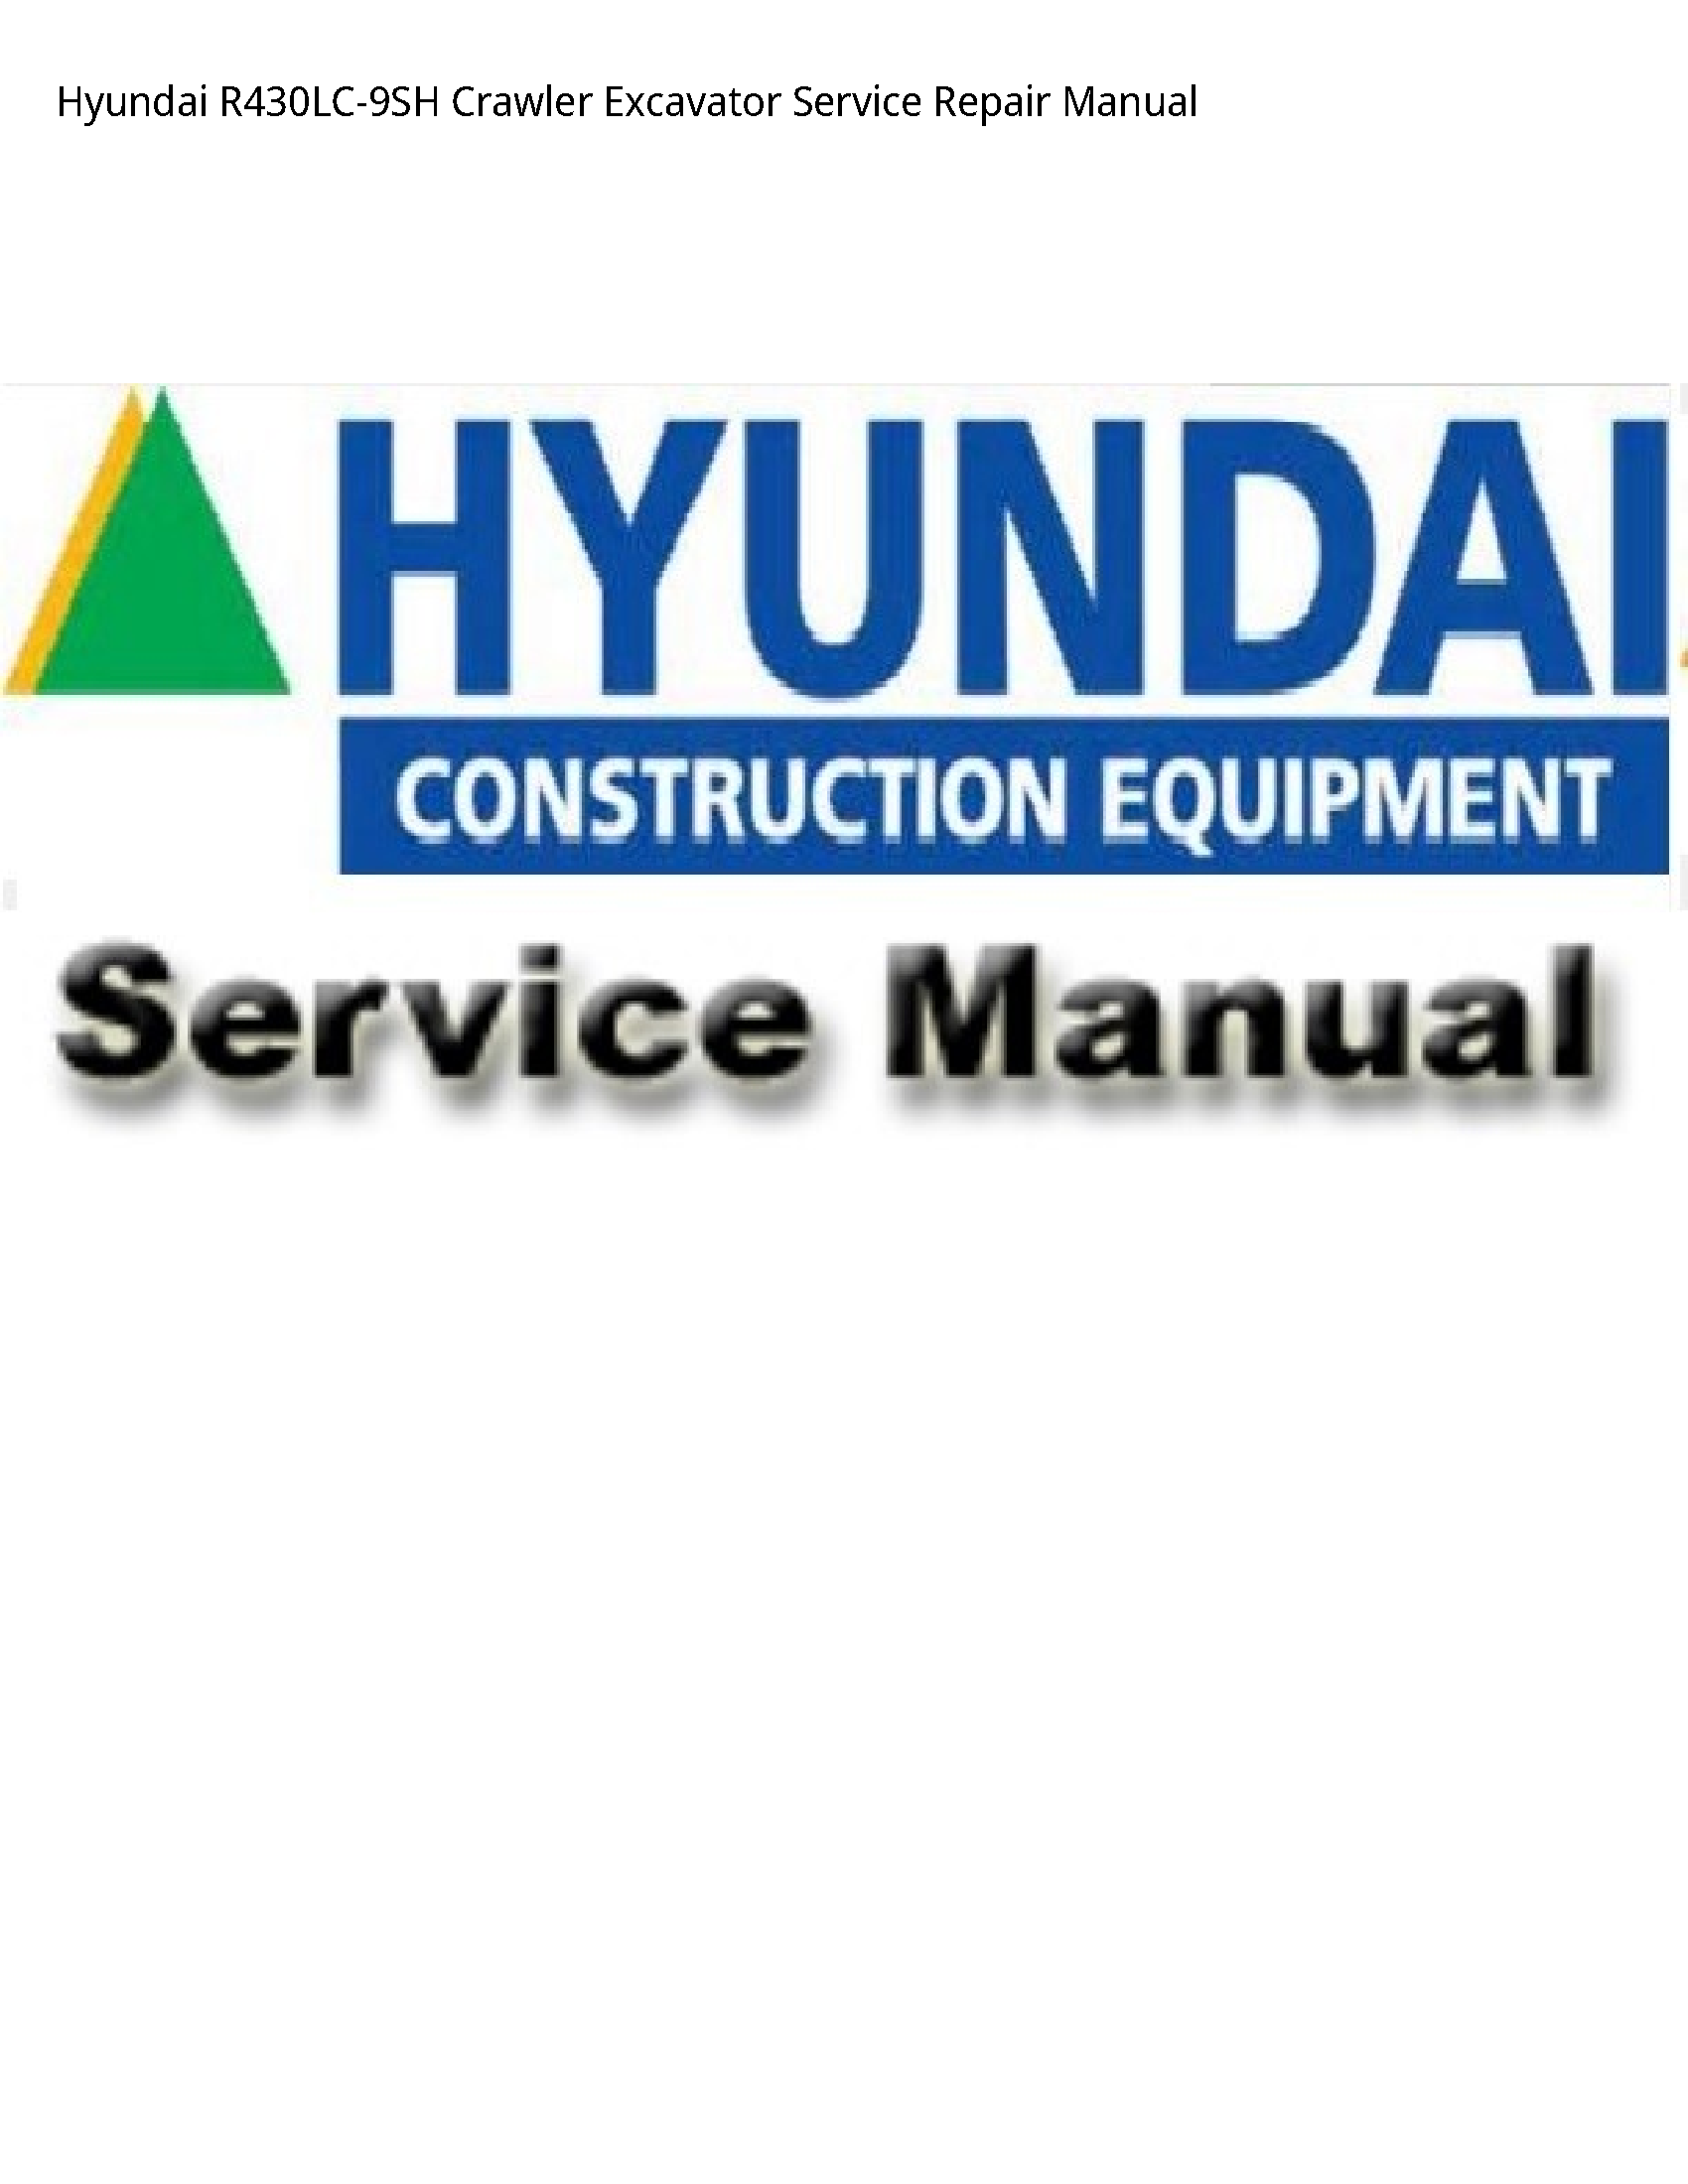 Hyundai R430LC-9SH Crawler Excavator manual